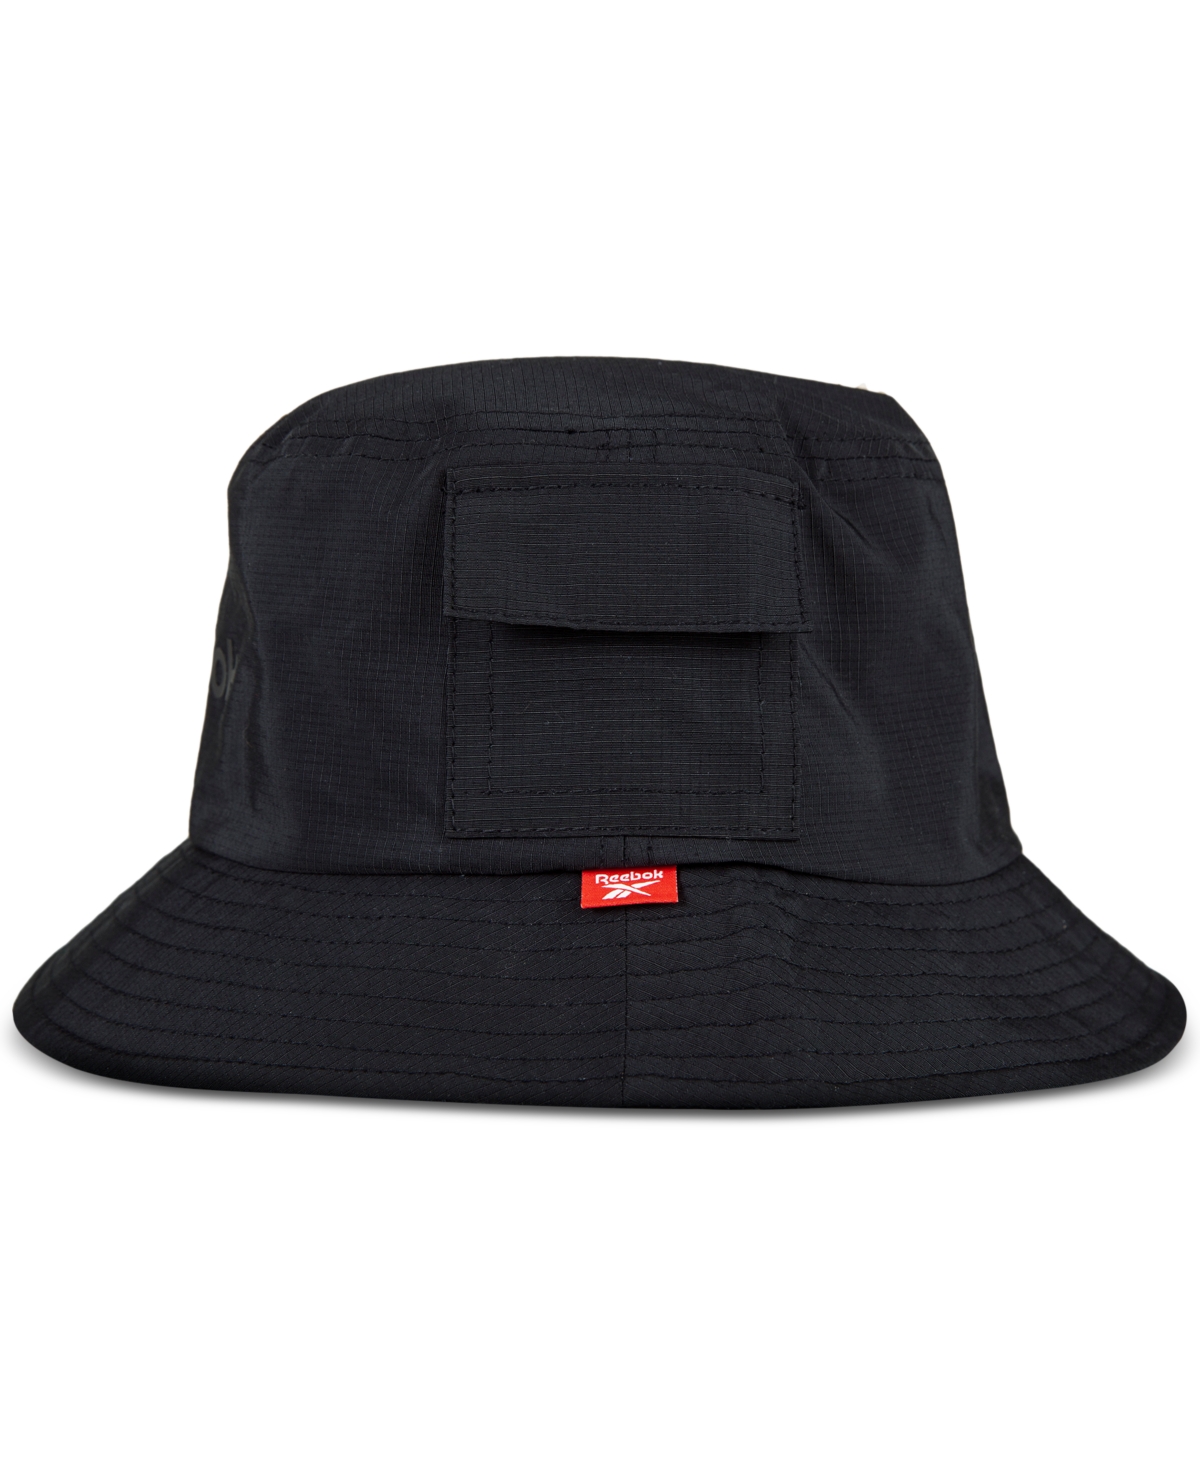 Men's Utility Bucket Hat - Black